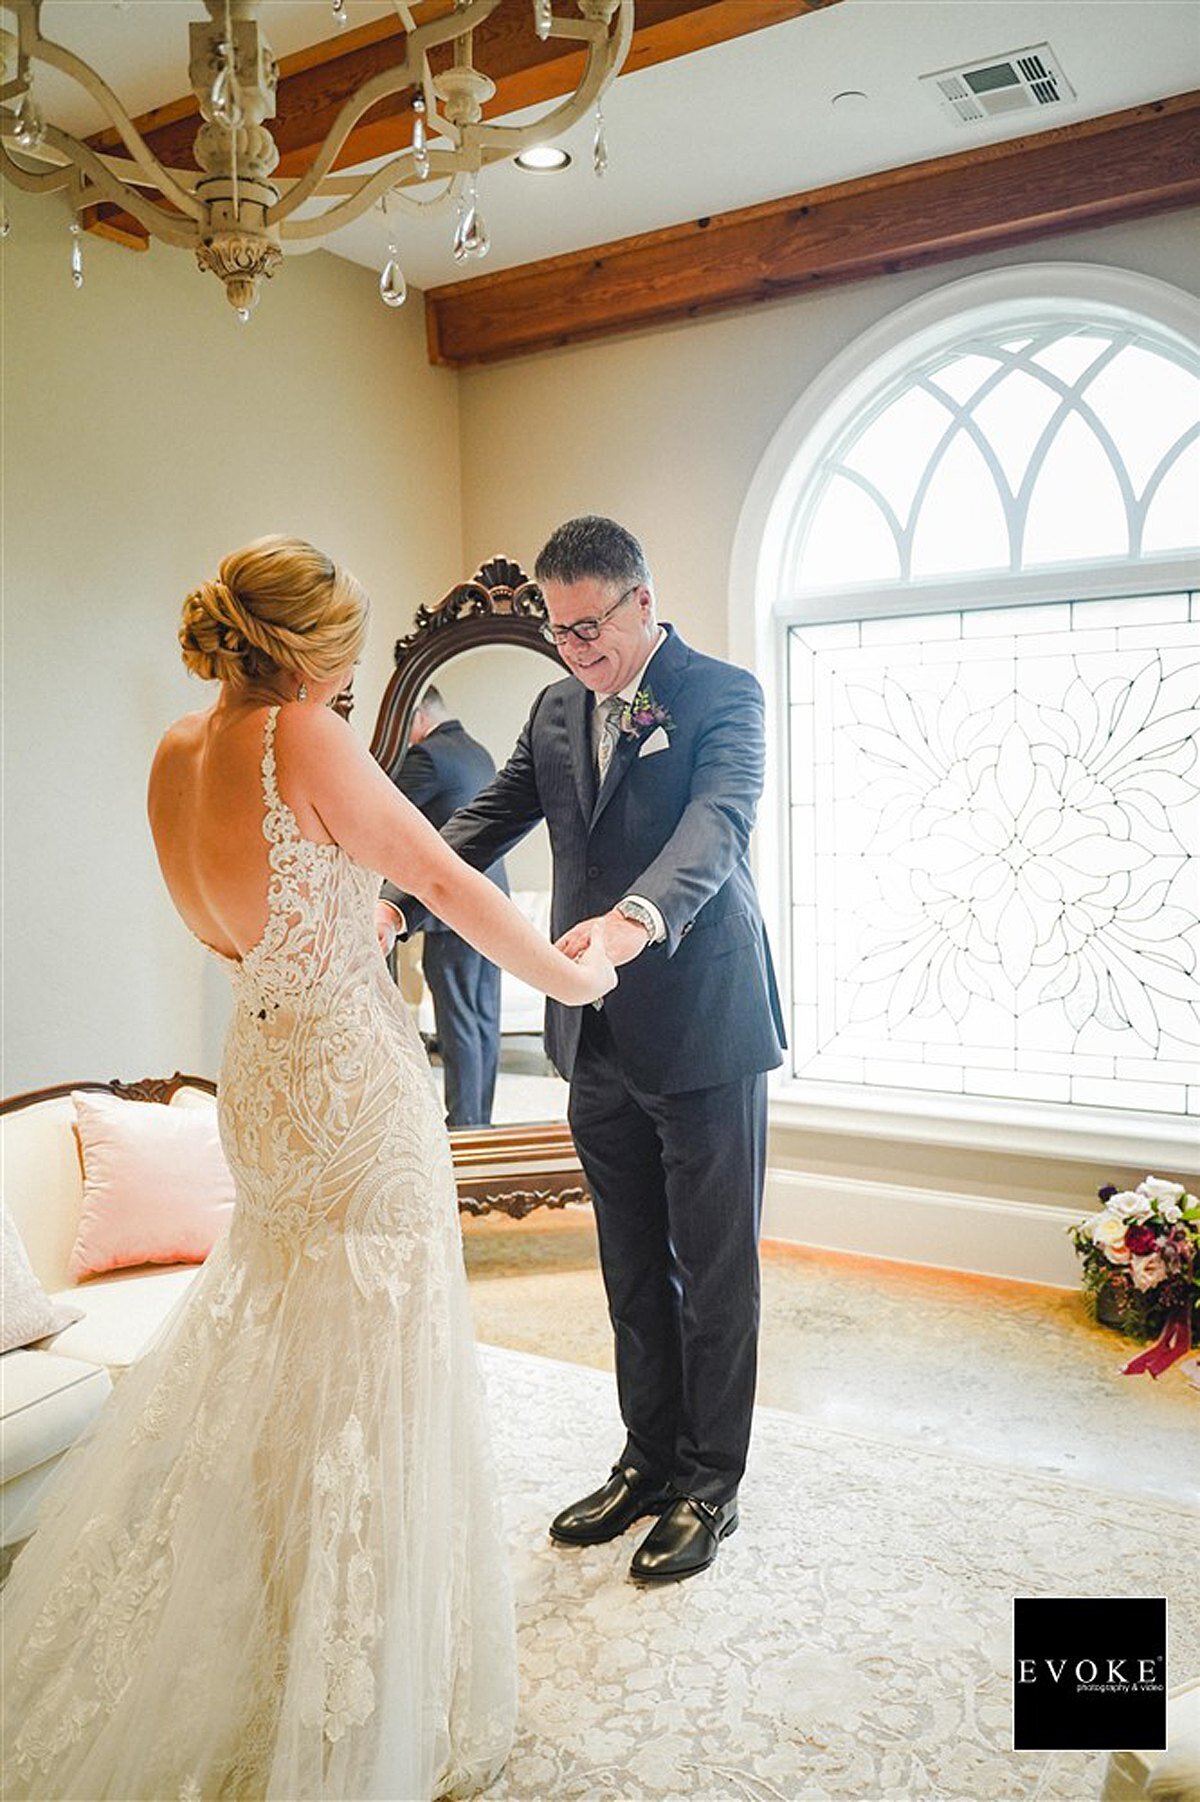 Bridal moment in Bridal Suite in Wedding Venue